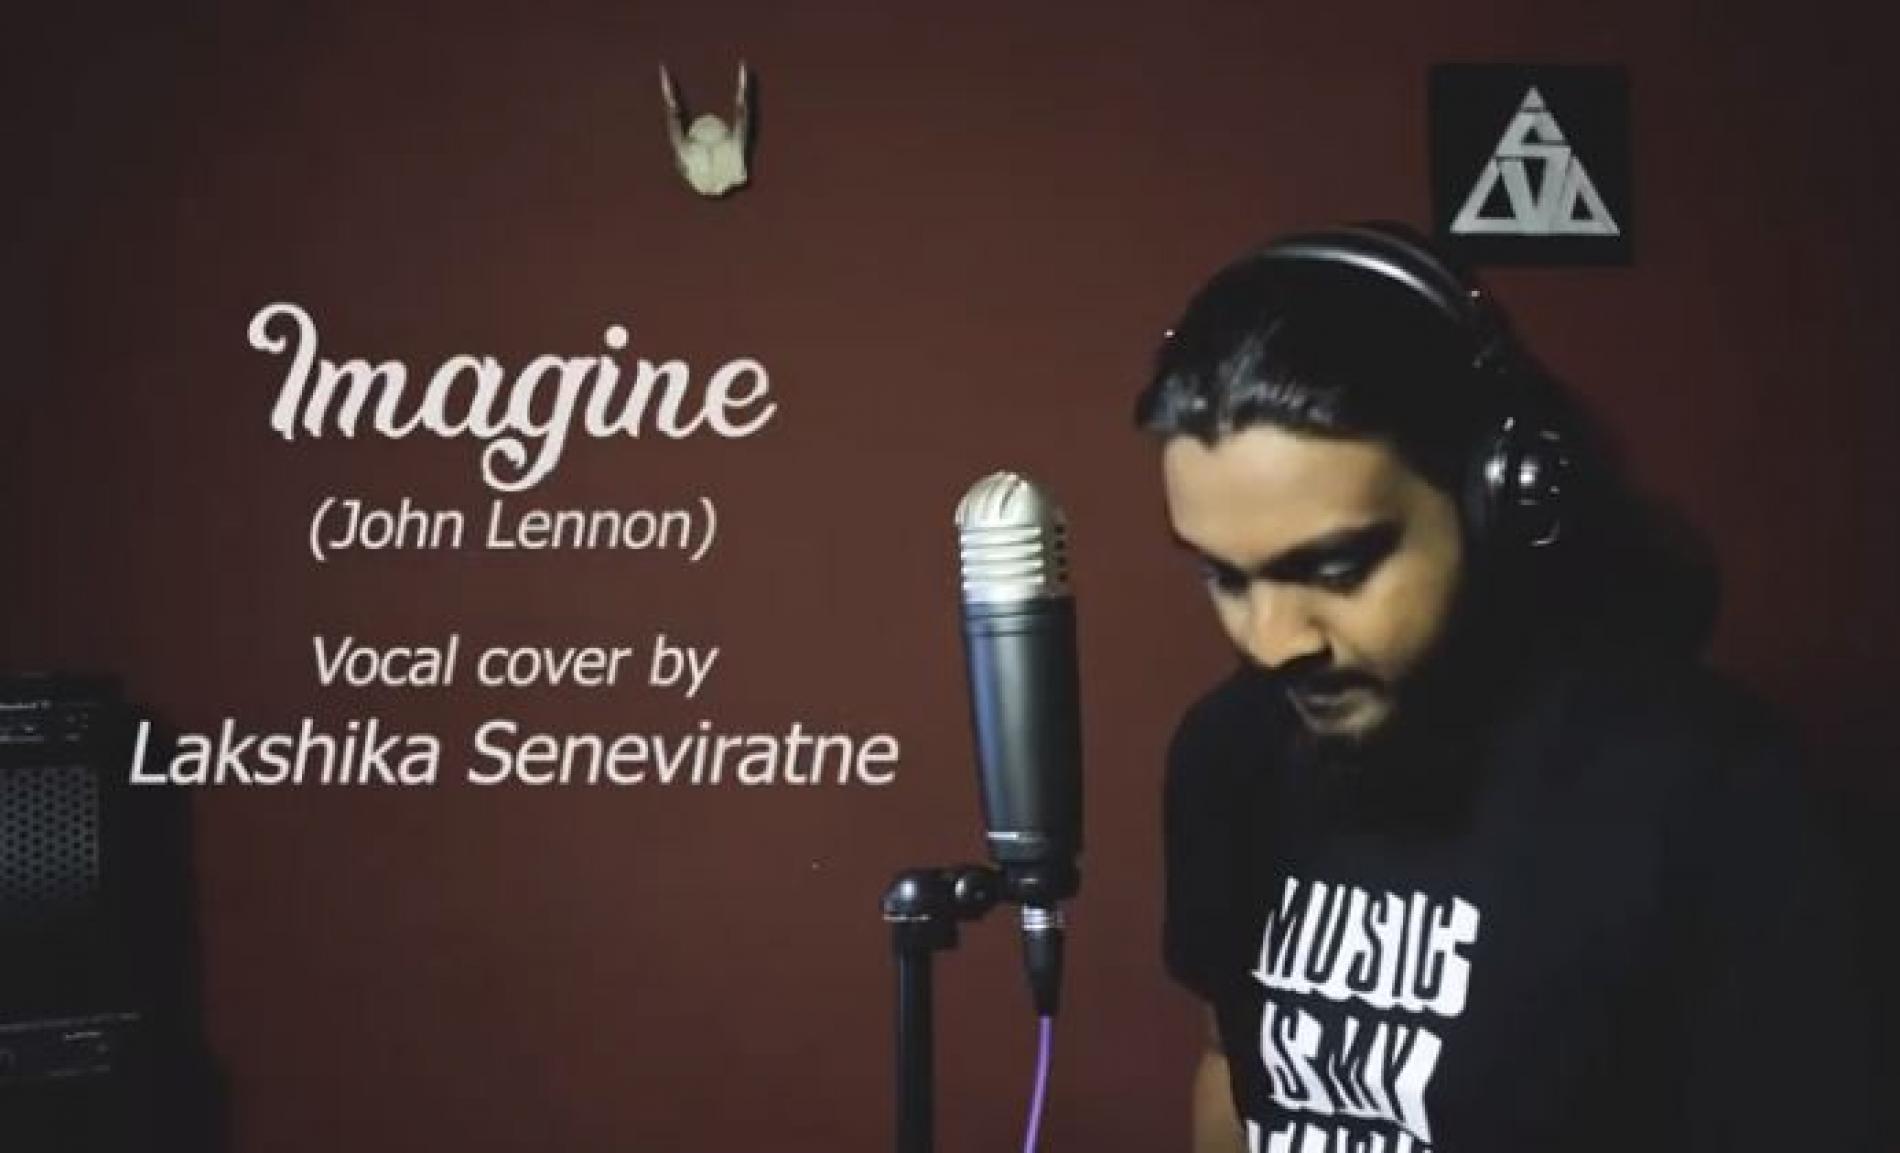 New Music : Imagine (John Lennon) – Vocal Cover by Lakshika Seneviratne